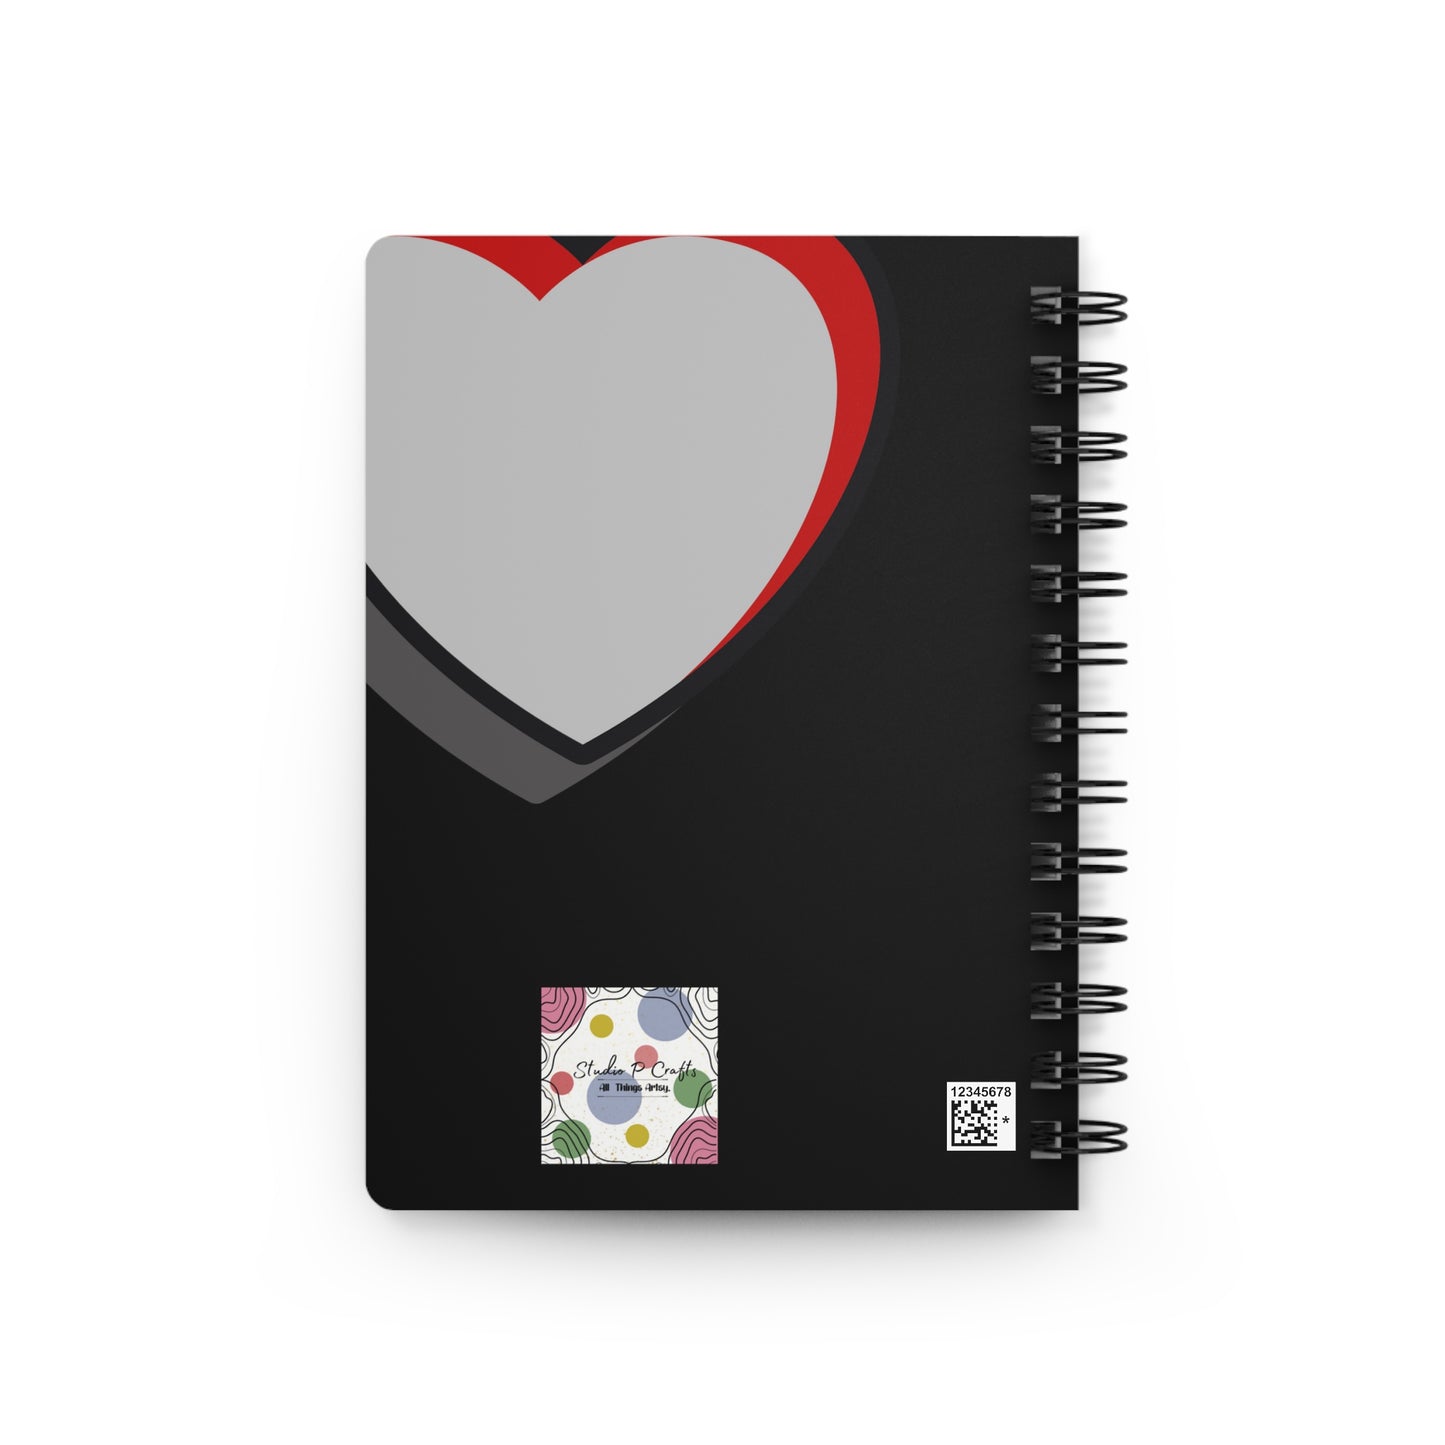 Heart 2 Heart Notebook, Black Colored Notebook, Black Notebook, Heart Design Notebook, Designer Notebook, College Student Notebook, School Notebook, Spiral Bound Journal